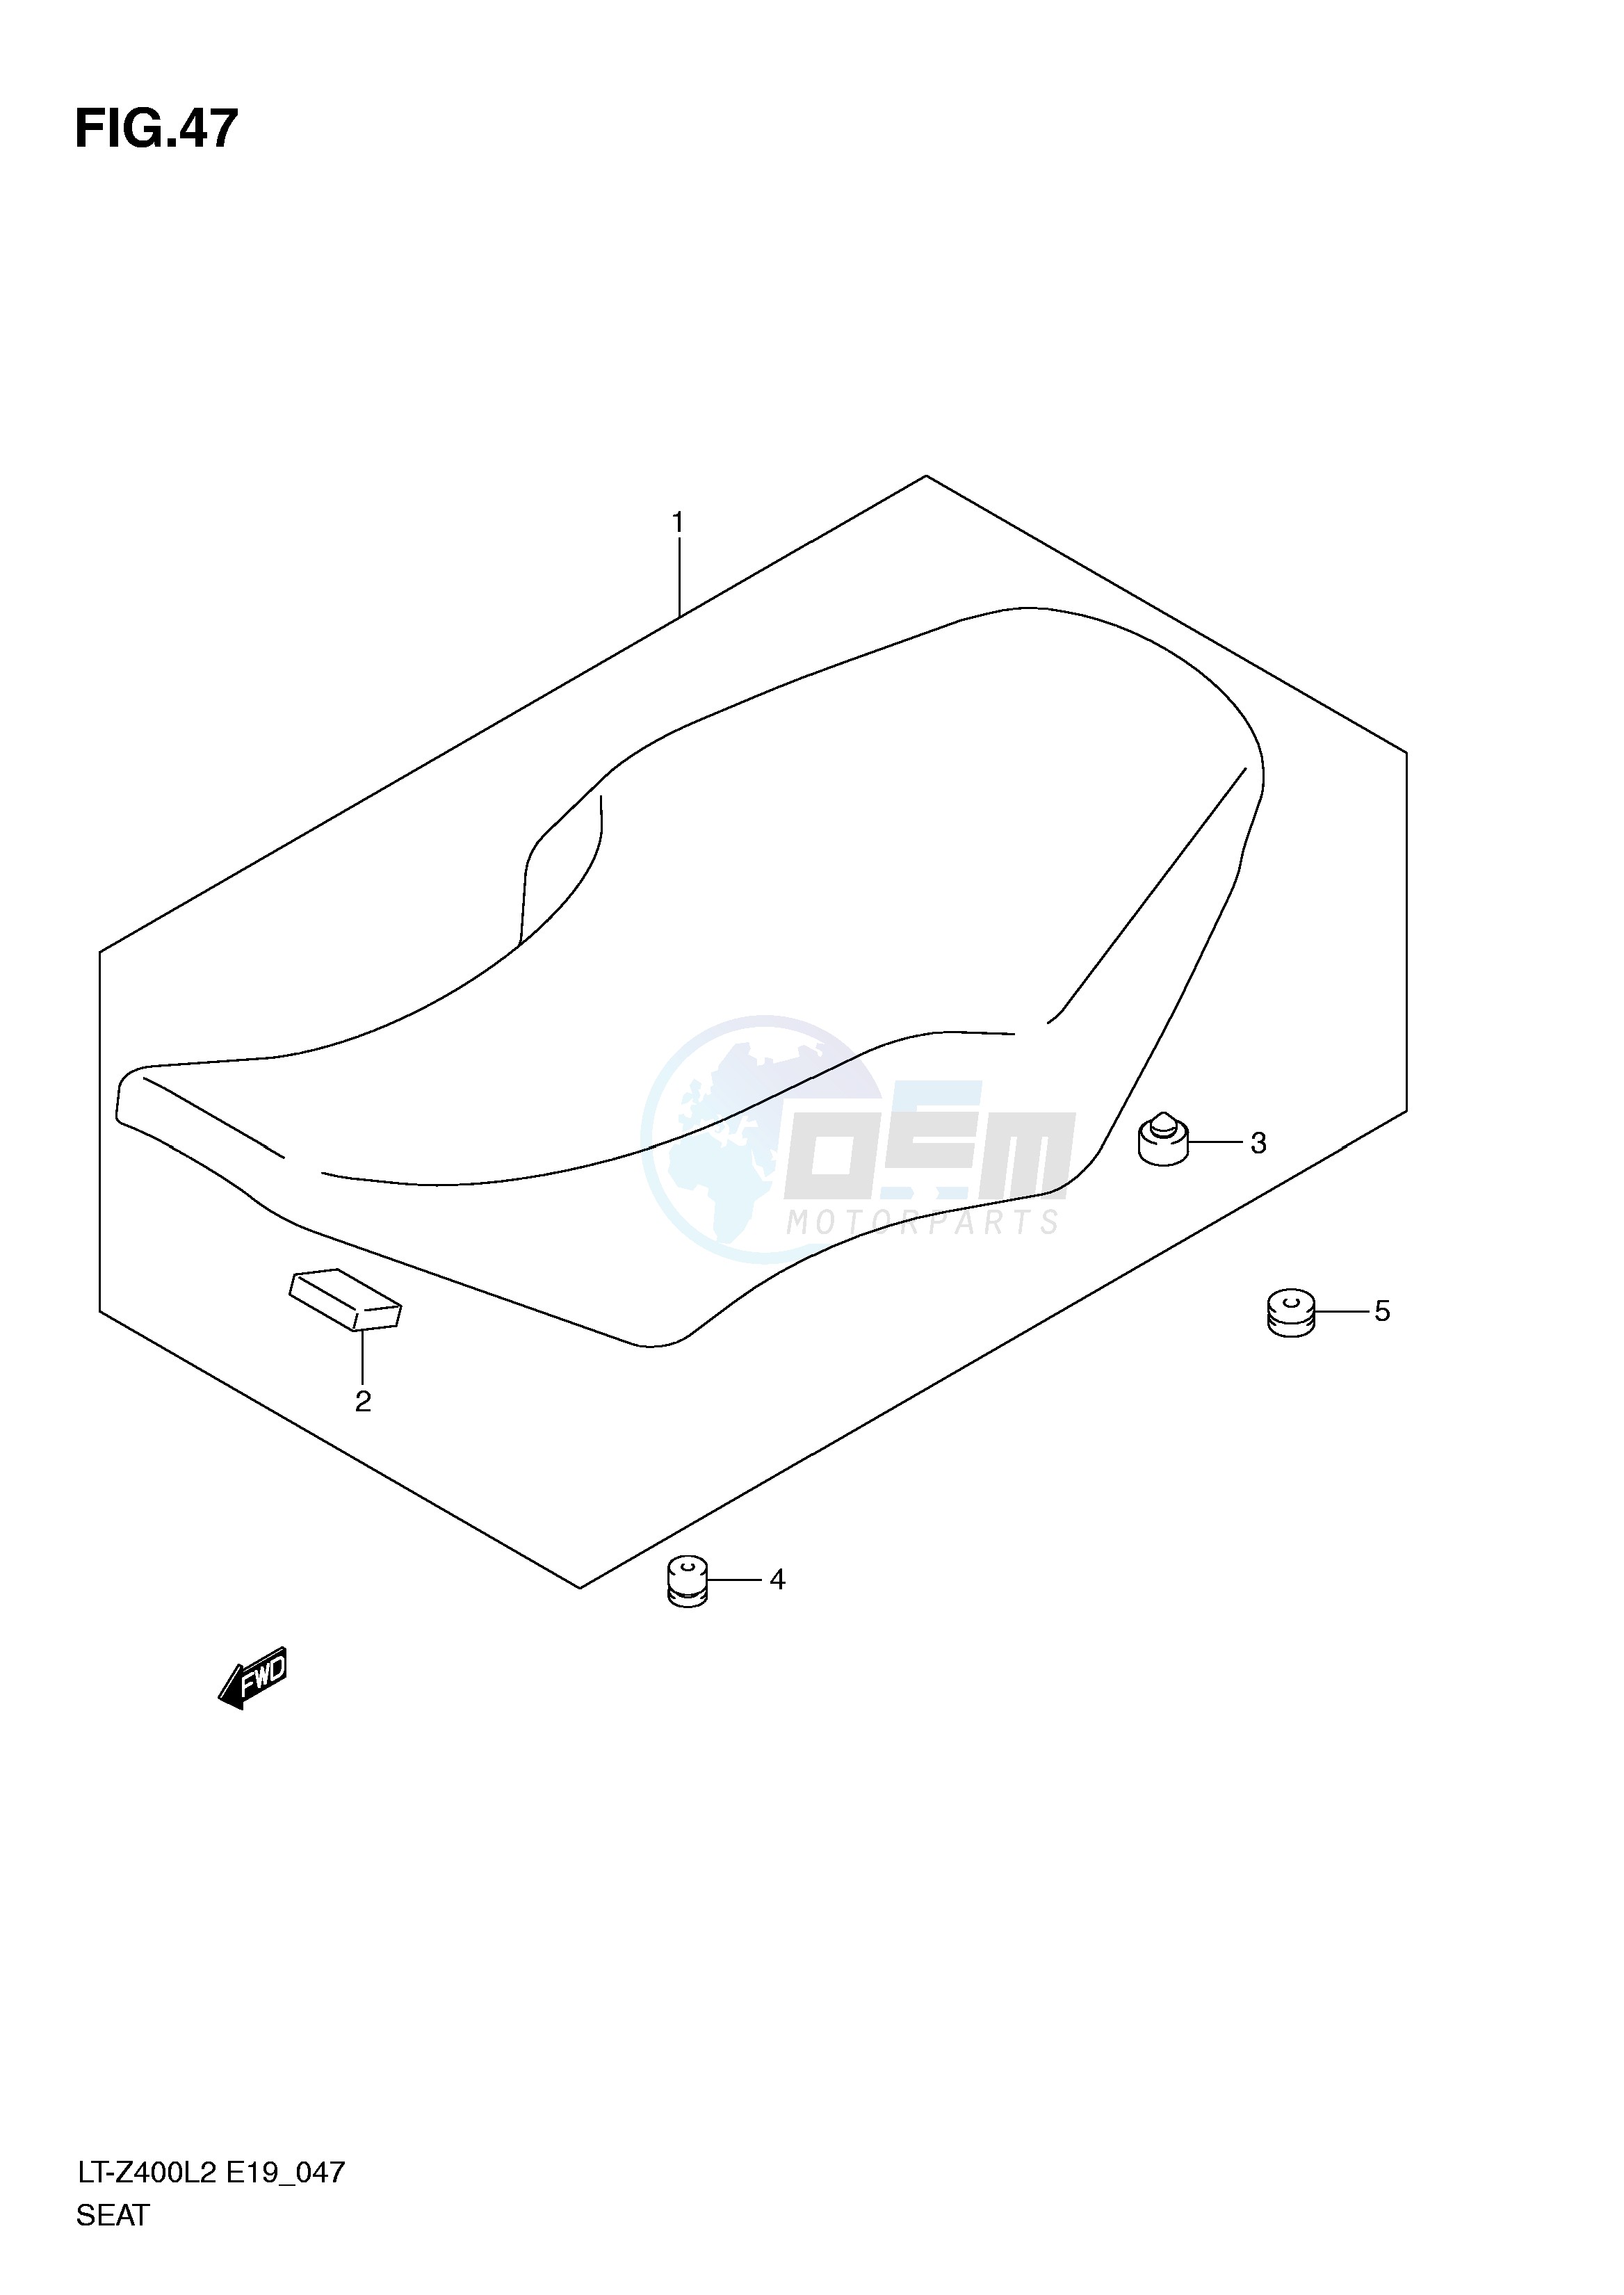 SEAT (LT-Z400L2 E19) blueprint